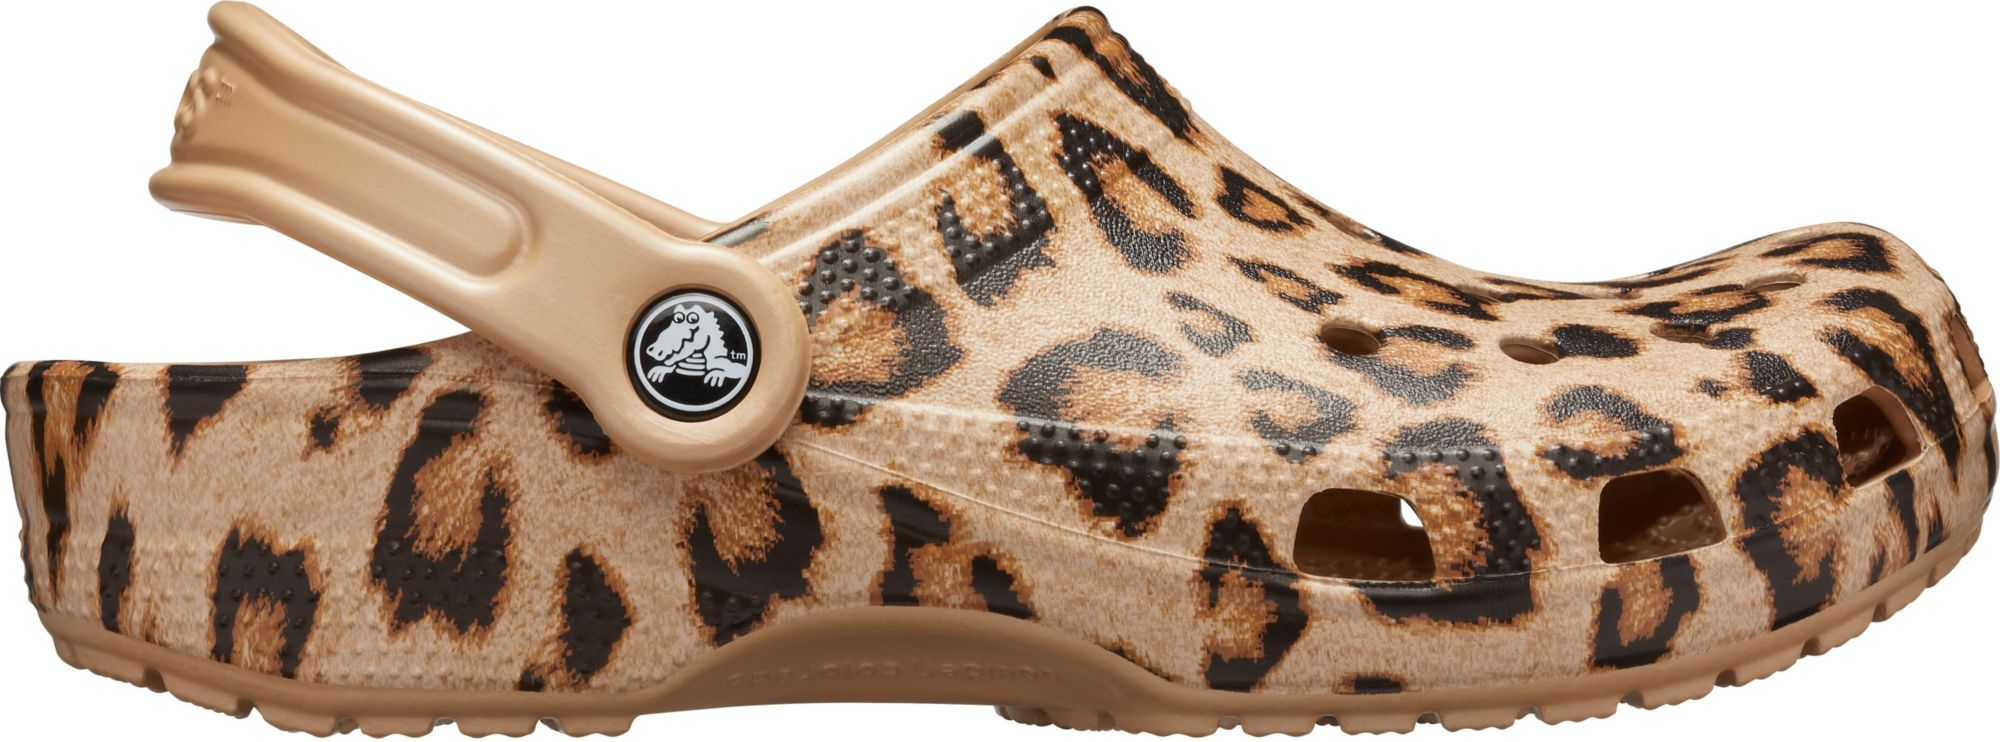 crocs leopard slip on